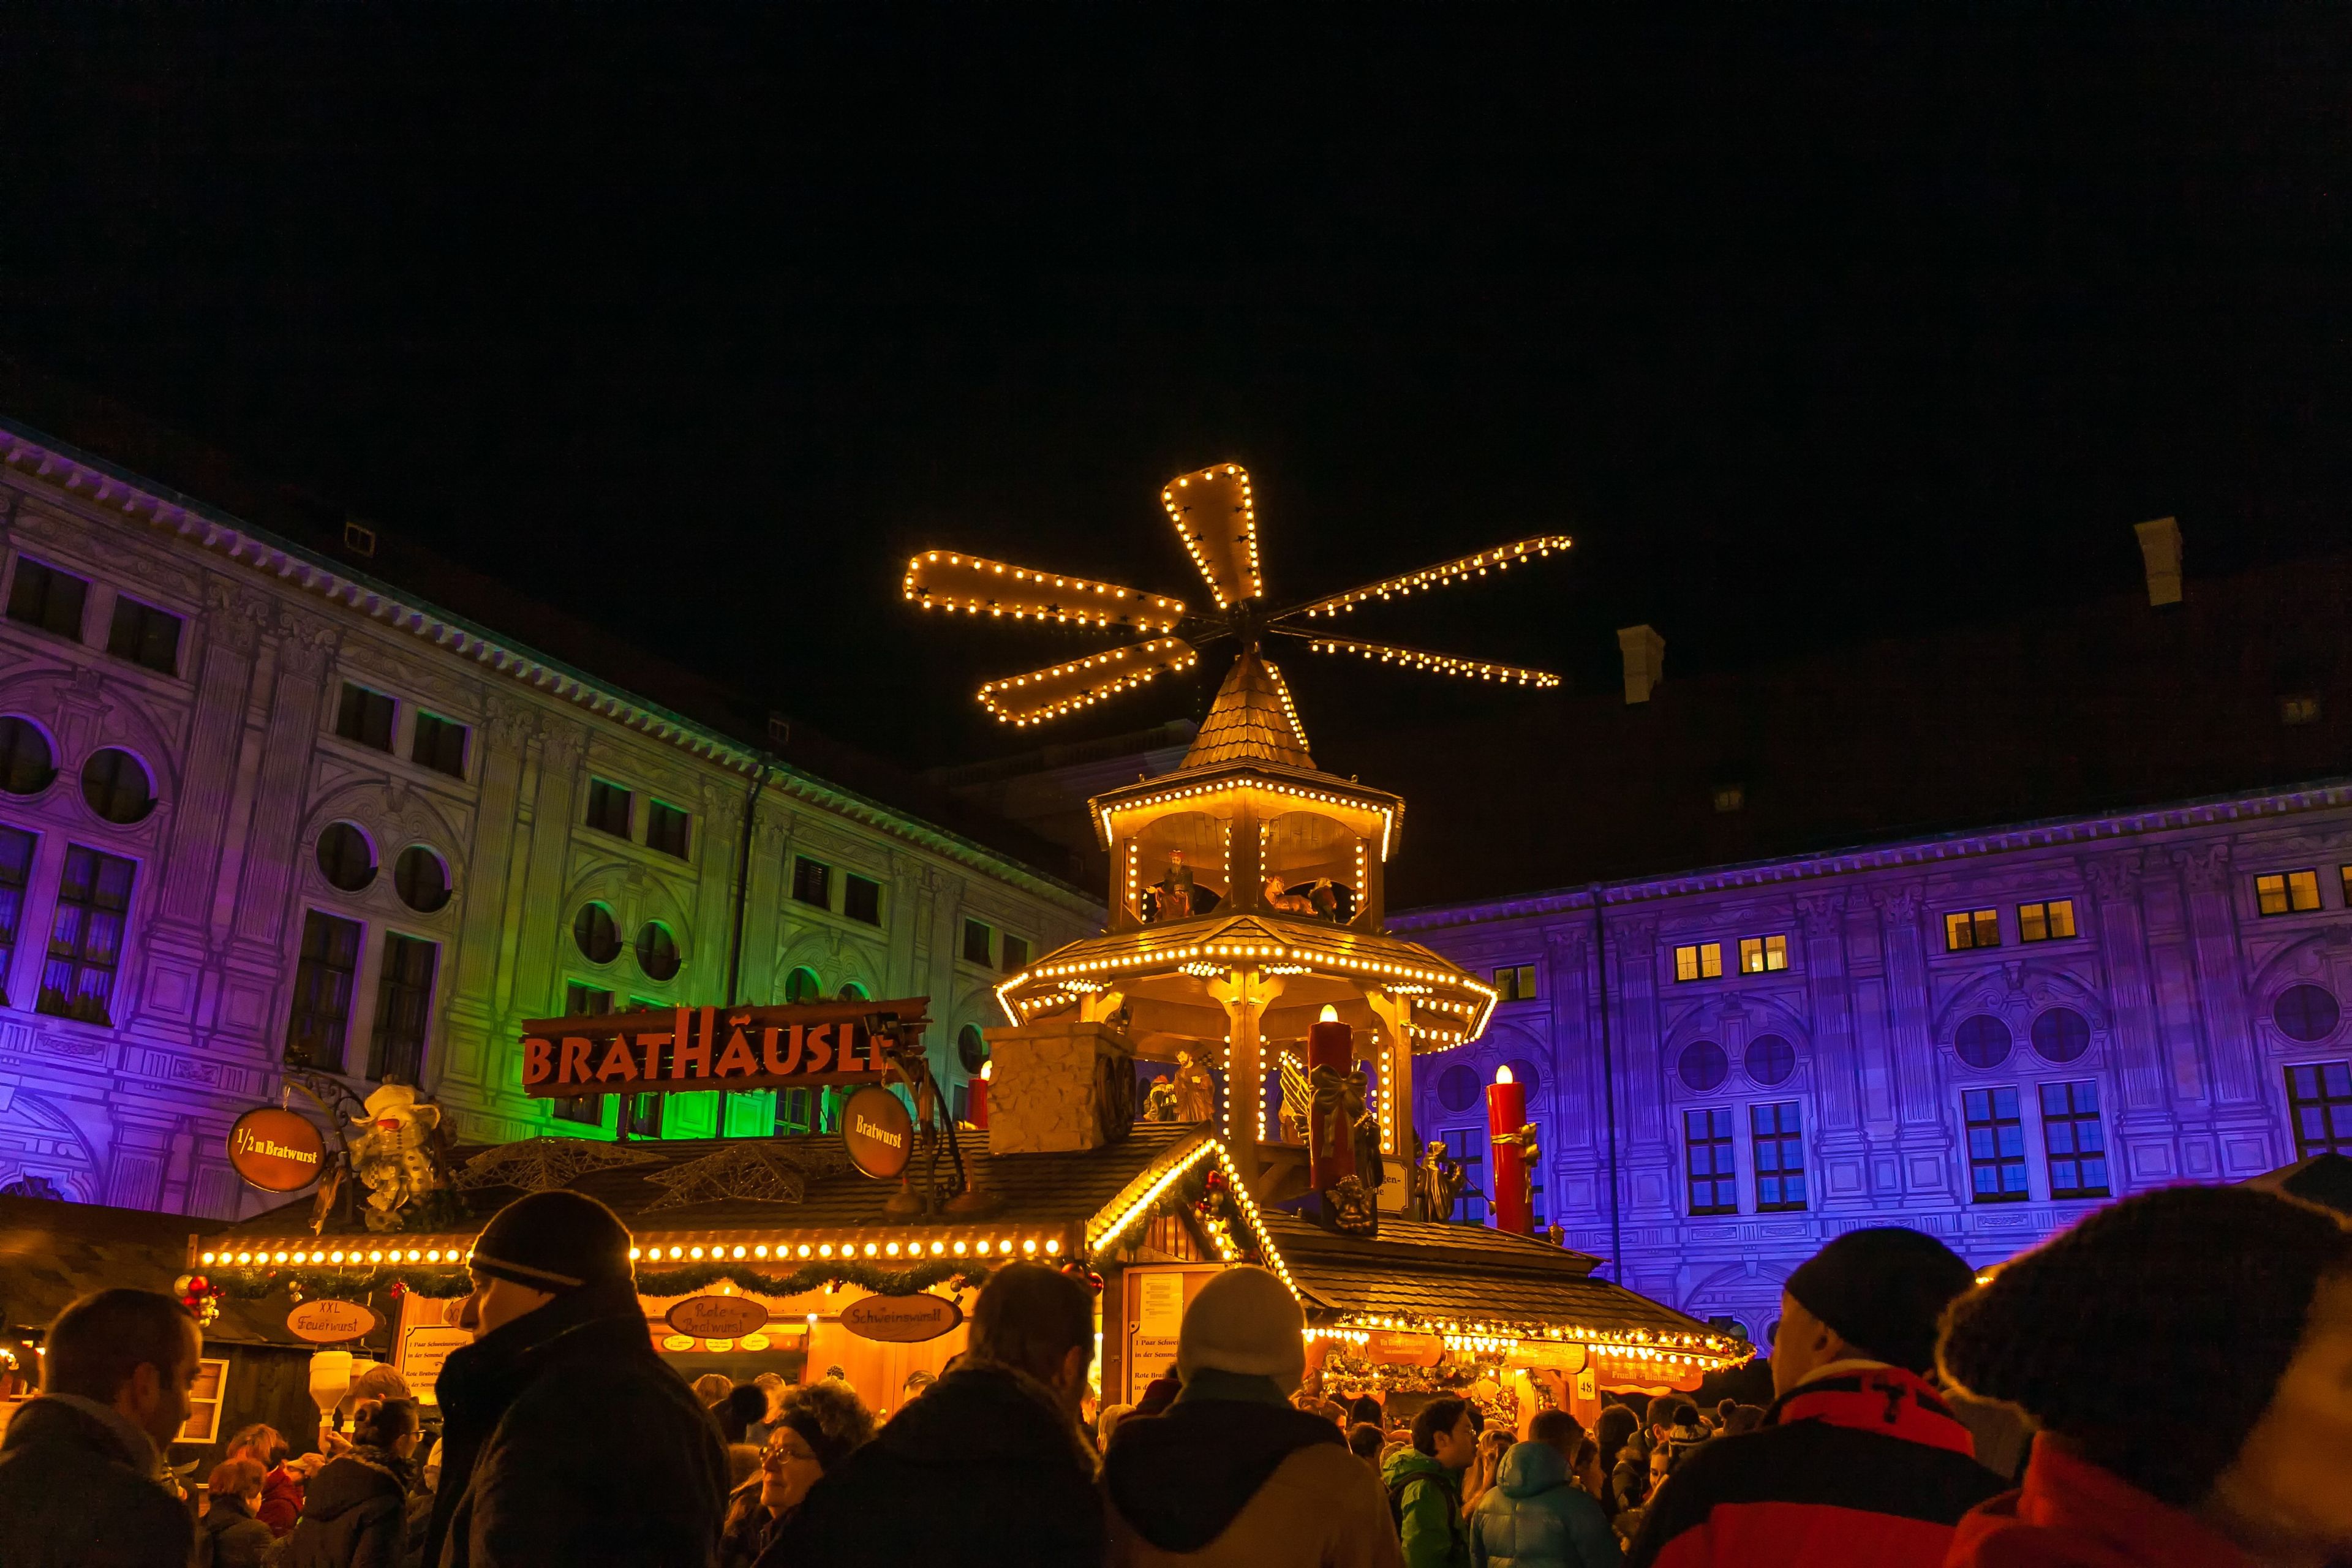 A large, illuminated Christmas pyramid overlooks a bustling Christmas market at night.